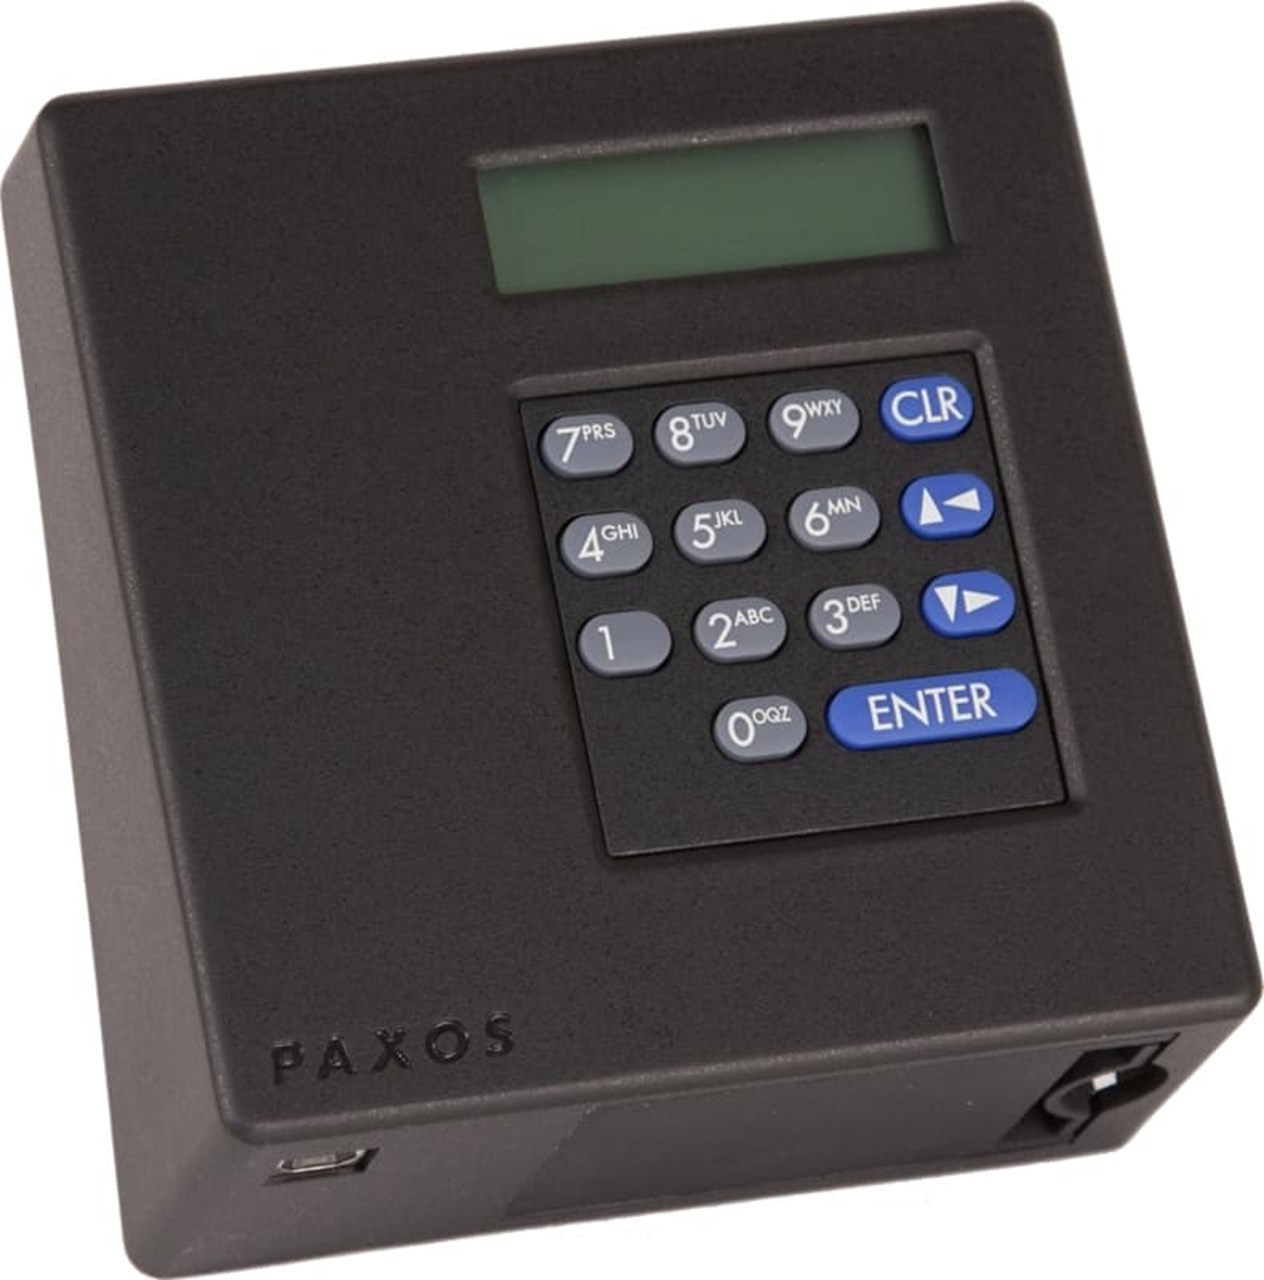 Paxos Advance IP high-security electronic redundant system